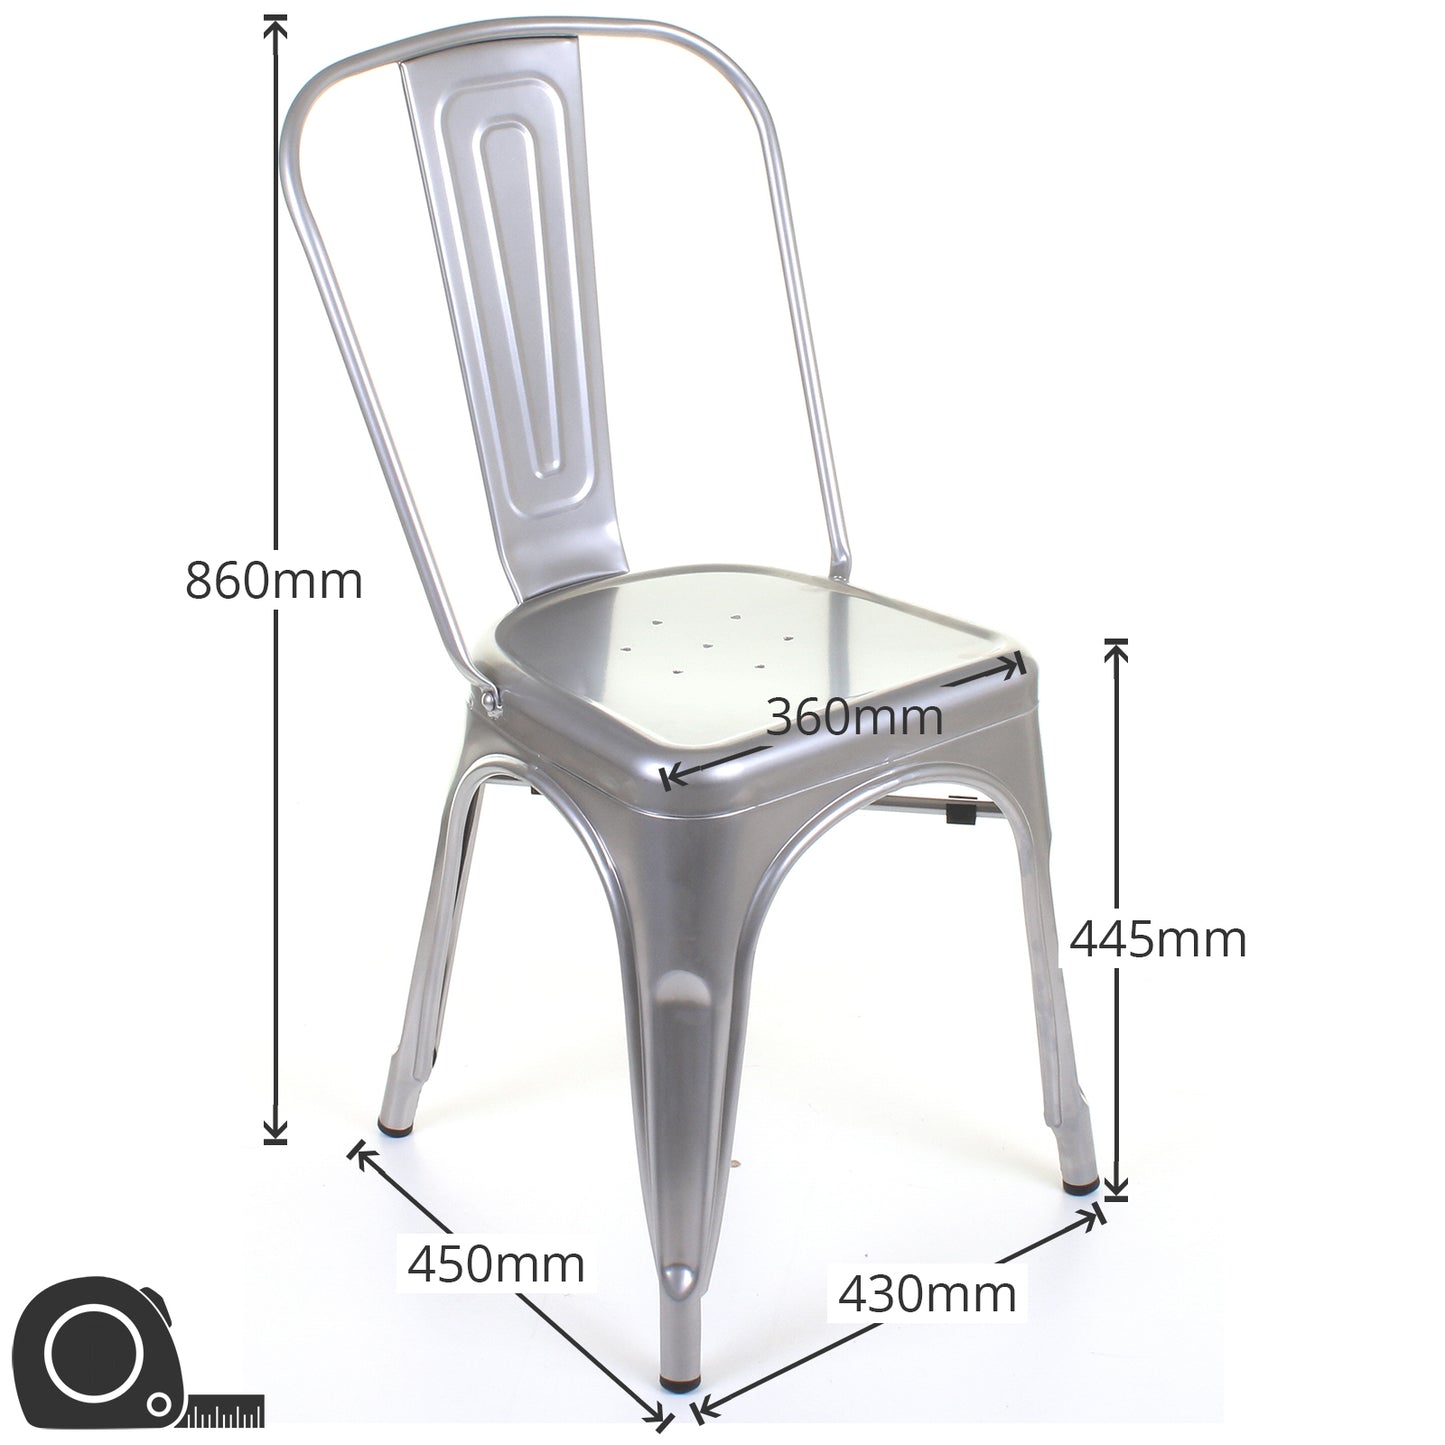 3PC Belvedere Table & Siena Chair Set - Steel